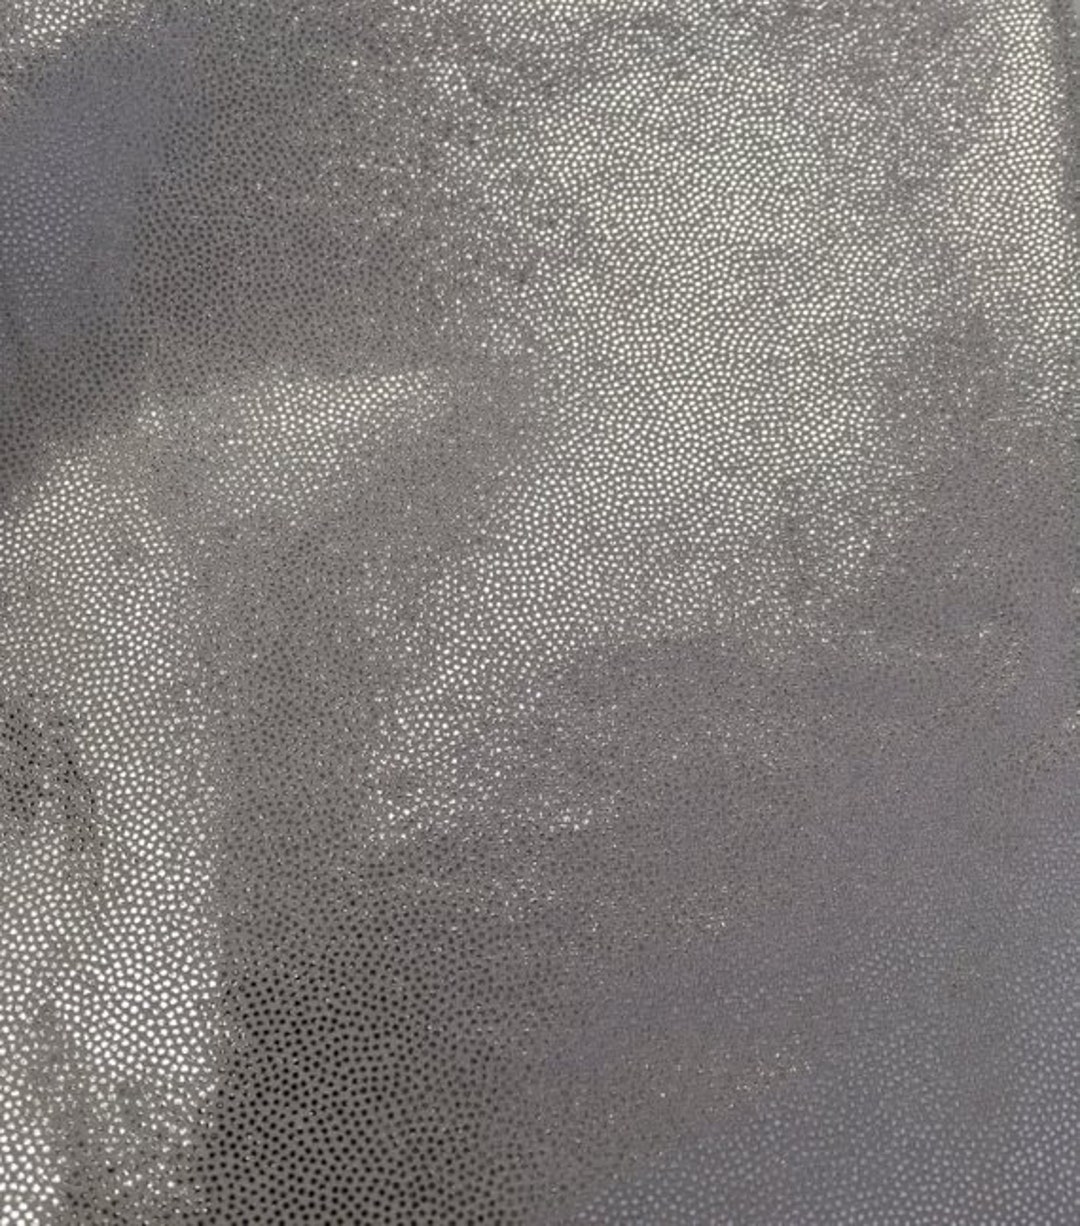 Iridescent Silver on White Nylon Spandex Mystique